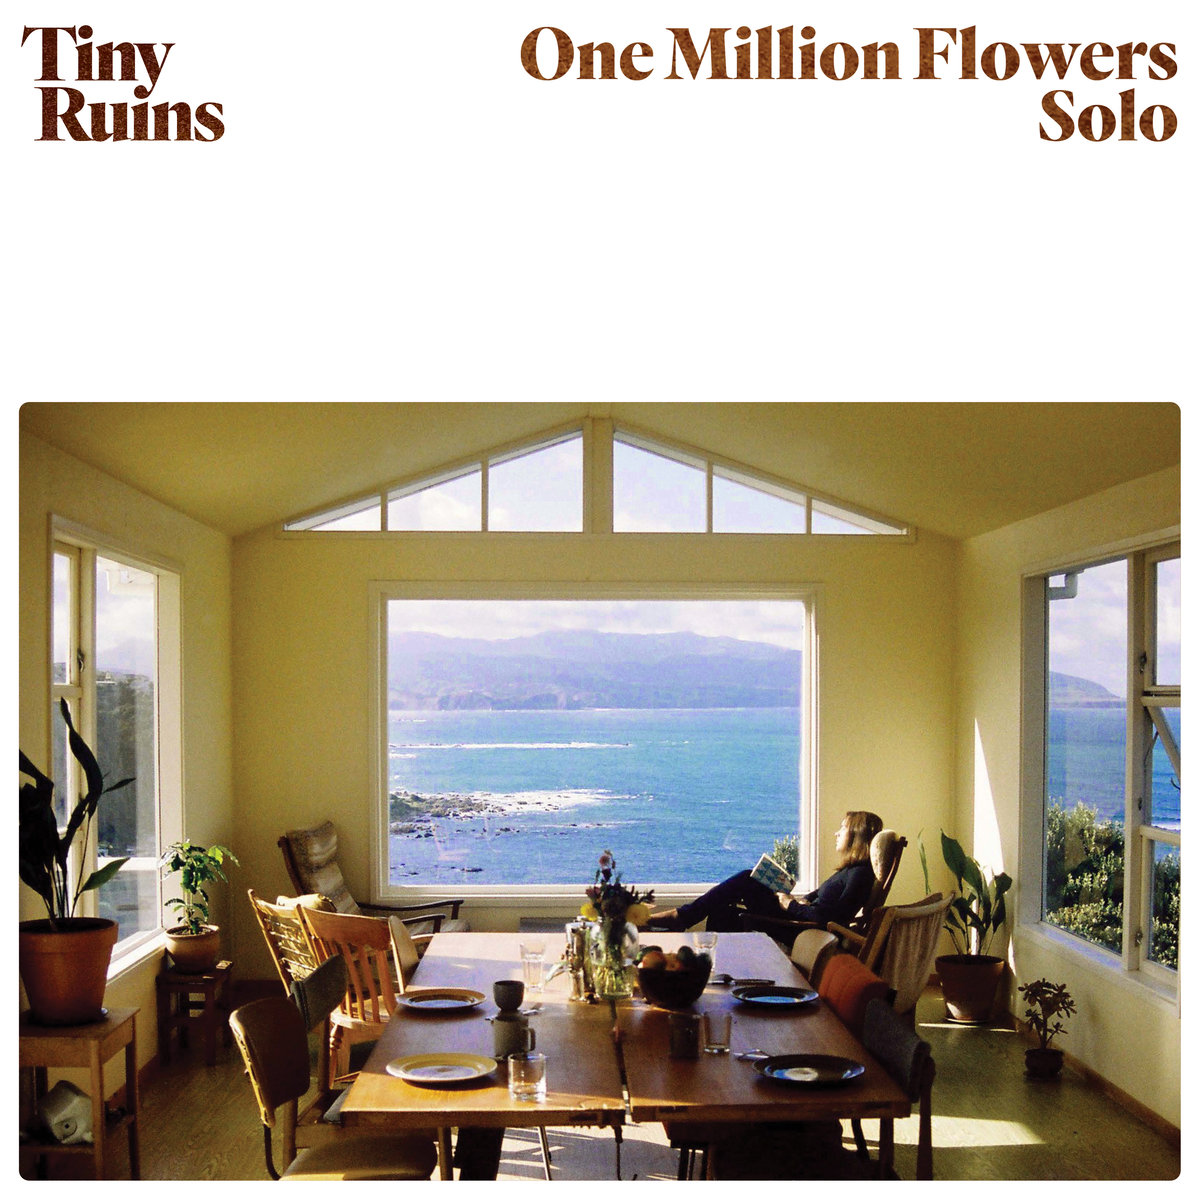 One Million Flowers (Solo)